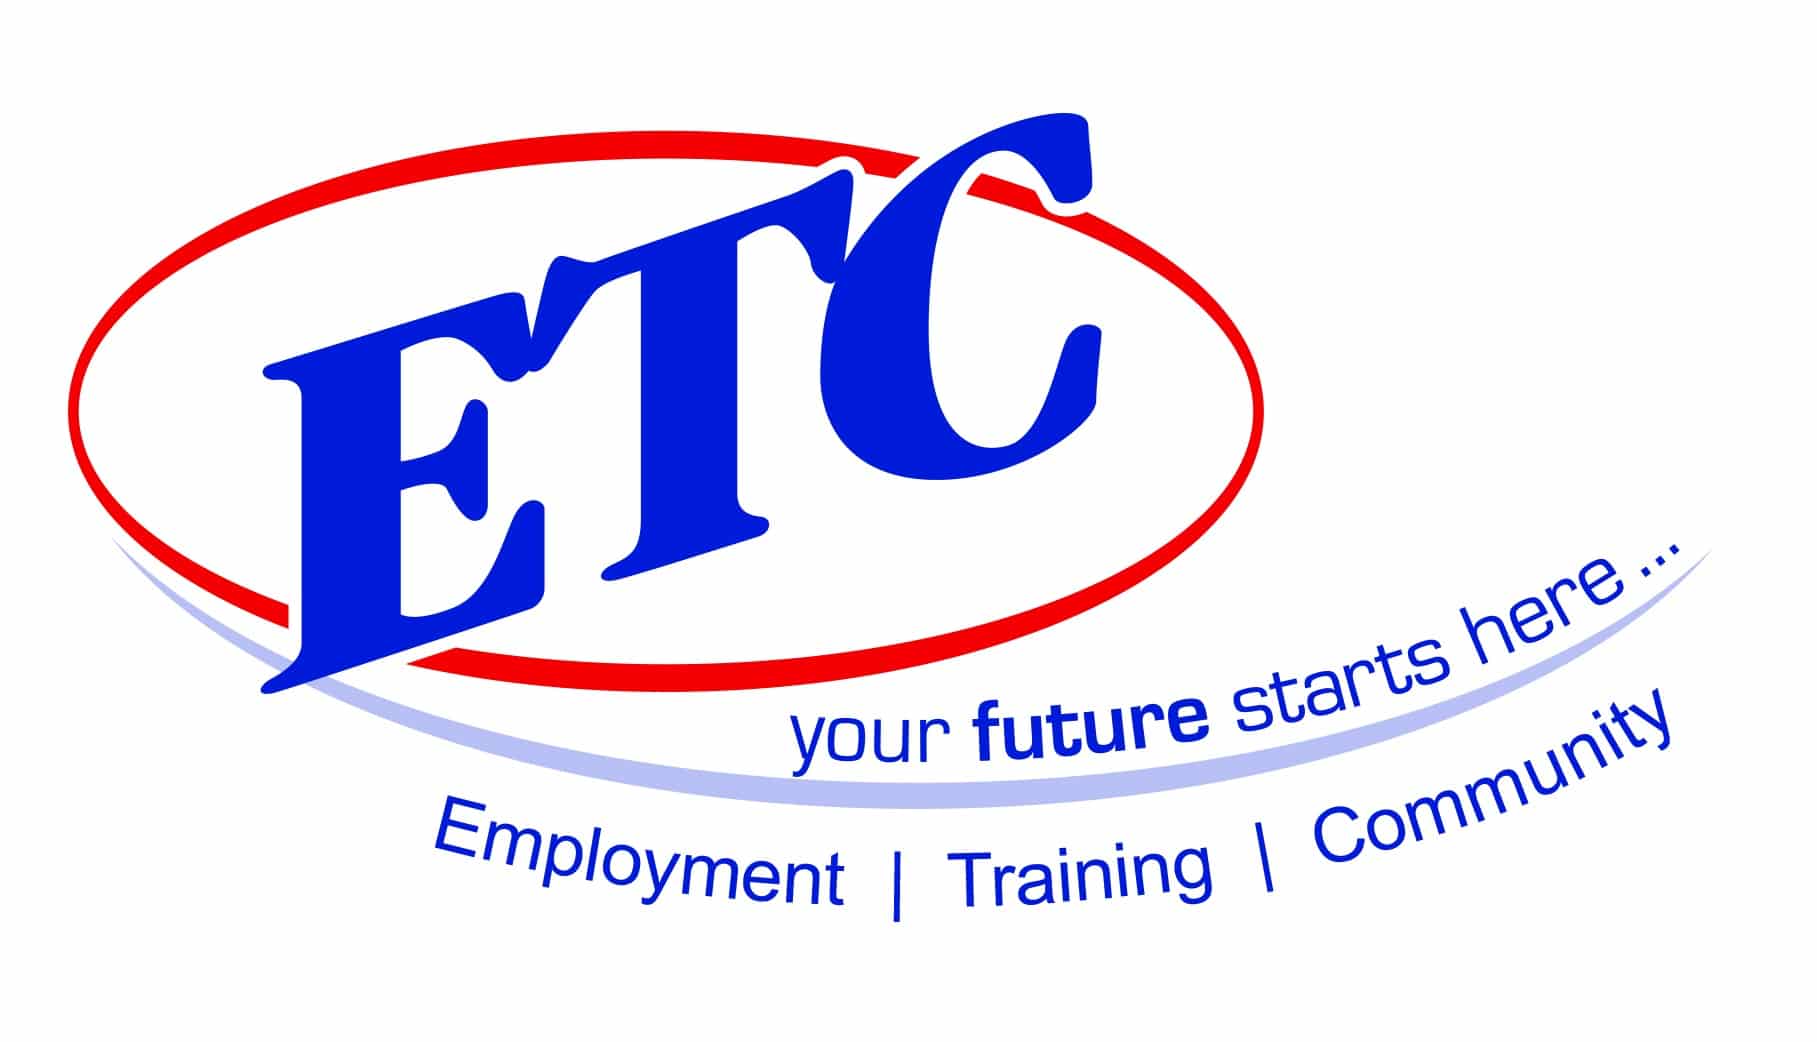 Enterprise & Training Company (ETC)